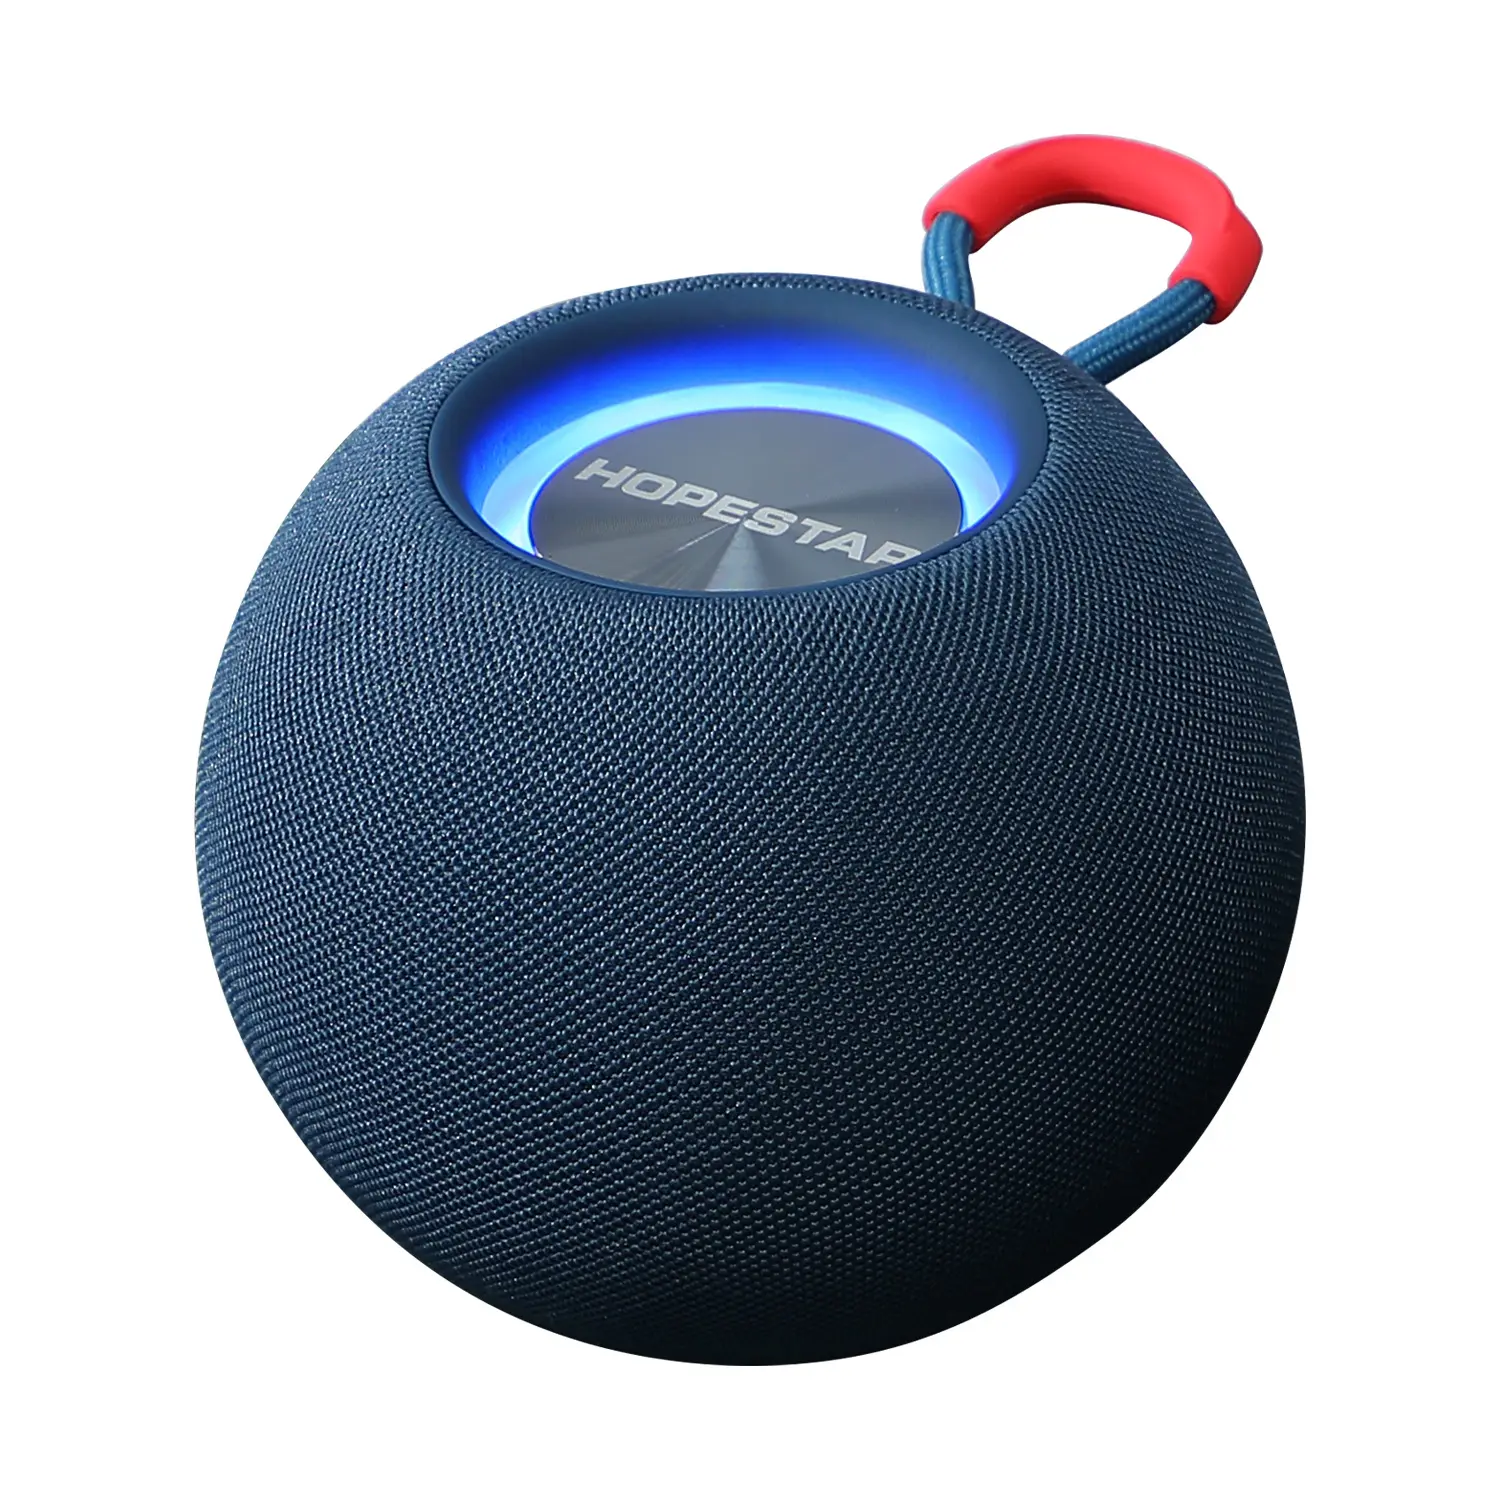 hot sell HOPESTAR H52 wireless Bluetooth speaker outdoor portable handheld heavy RGB colorful lamp mini subwoofer speaker